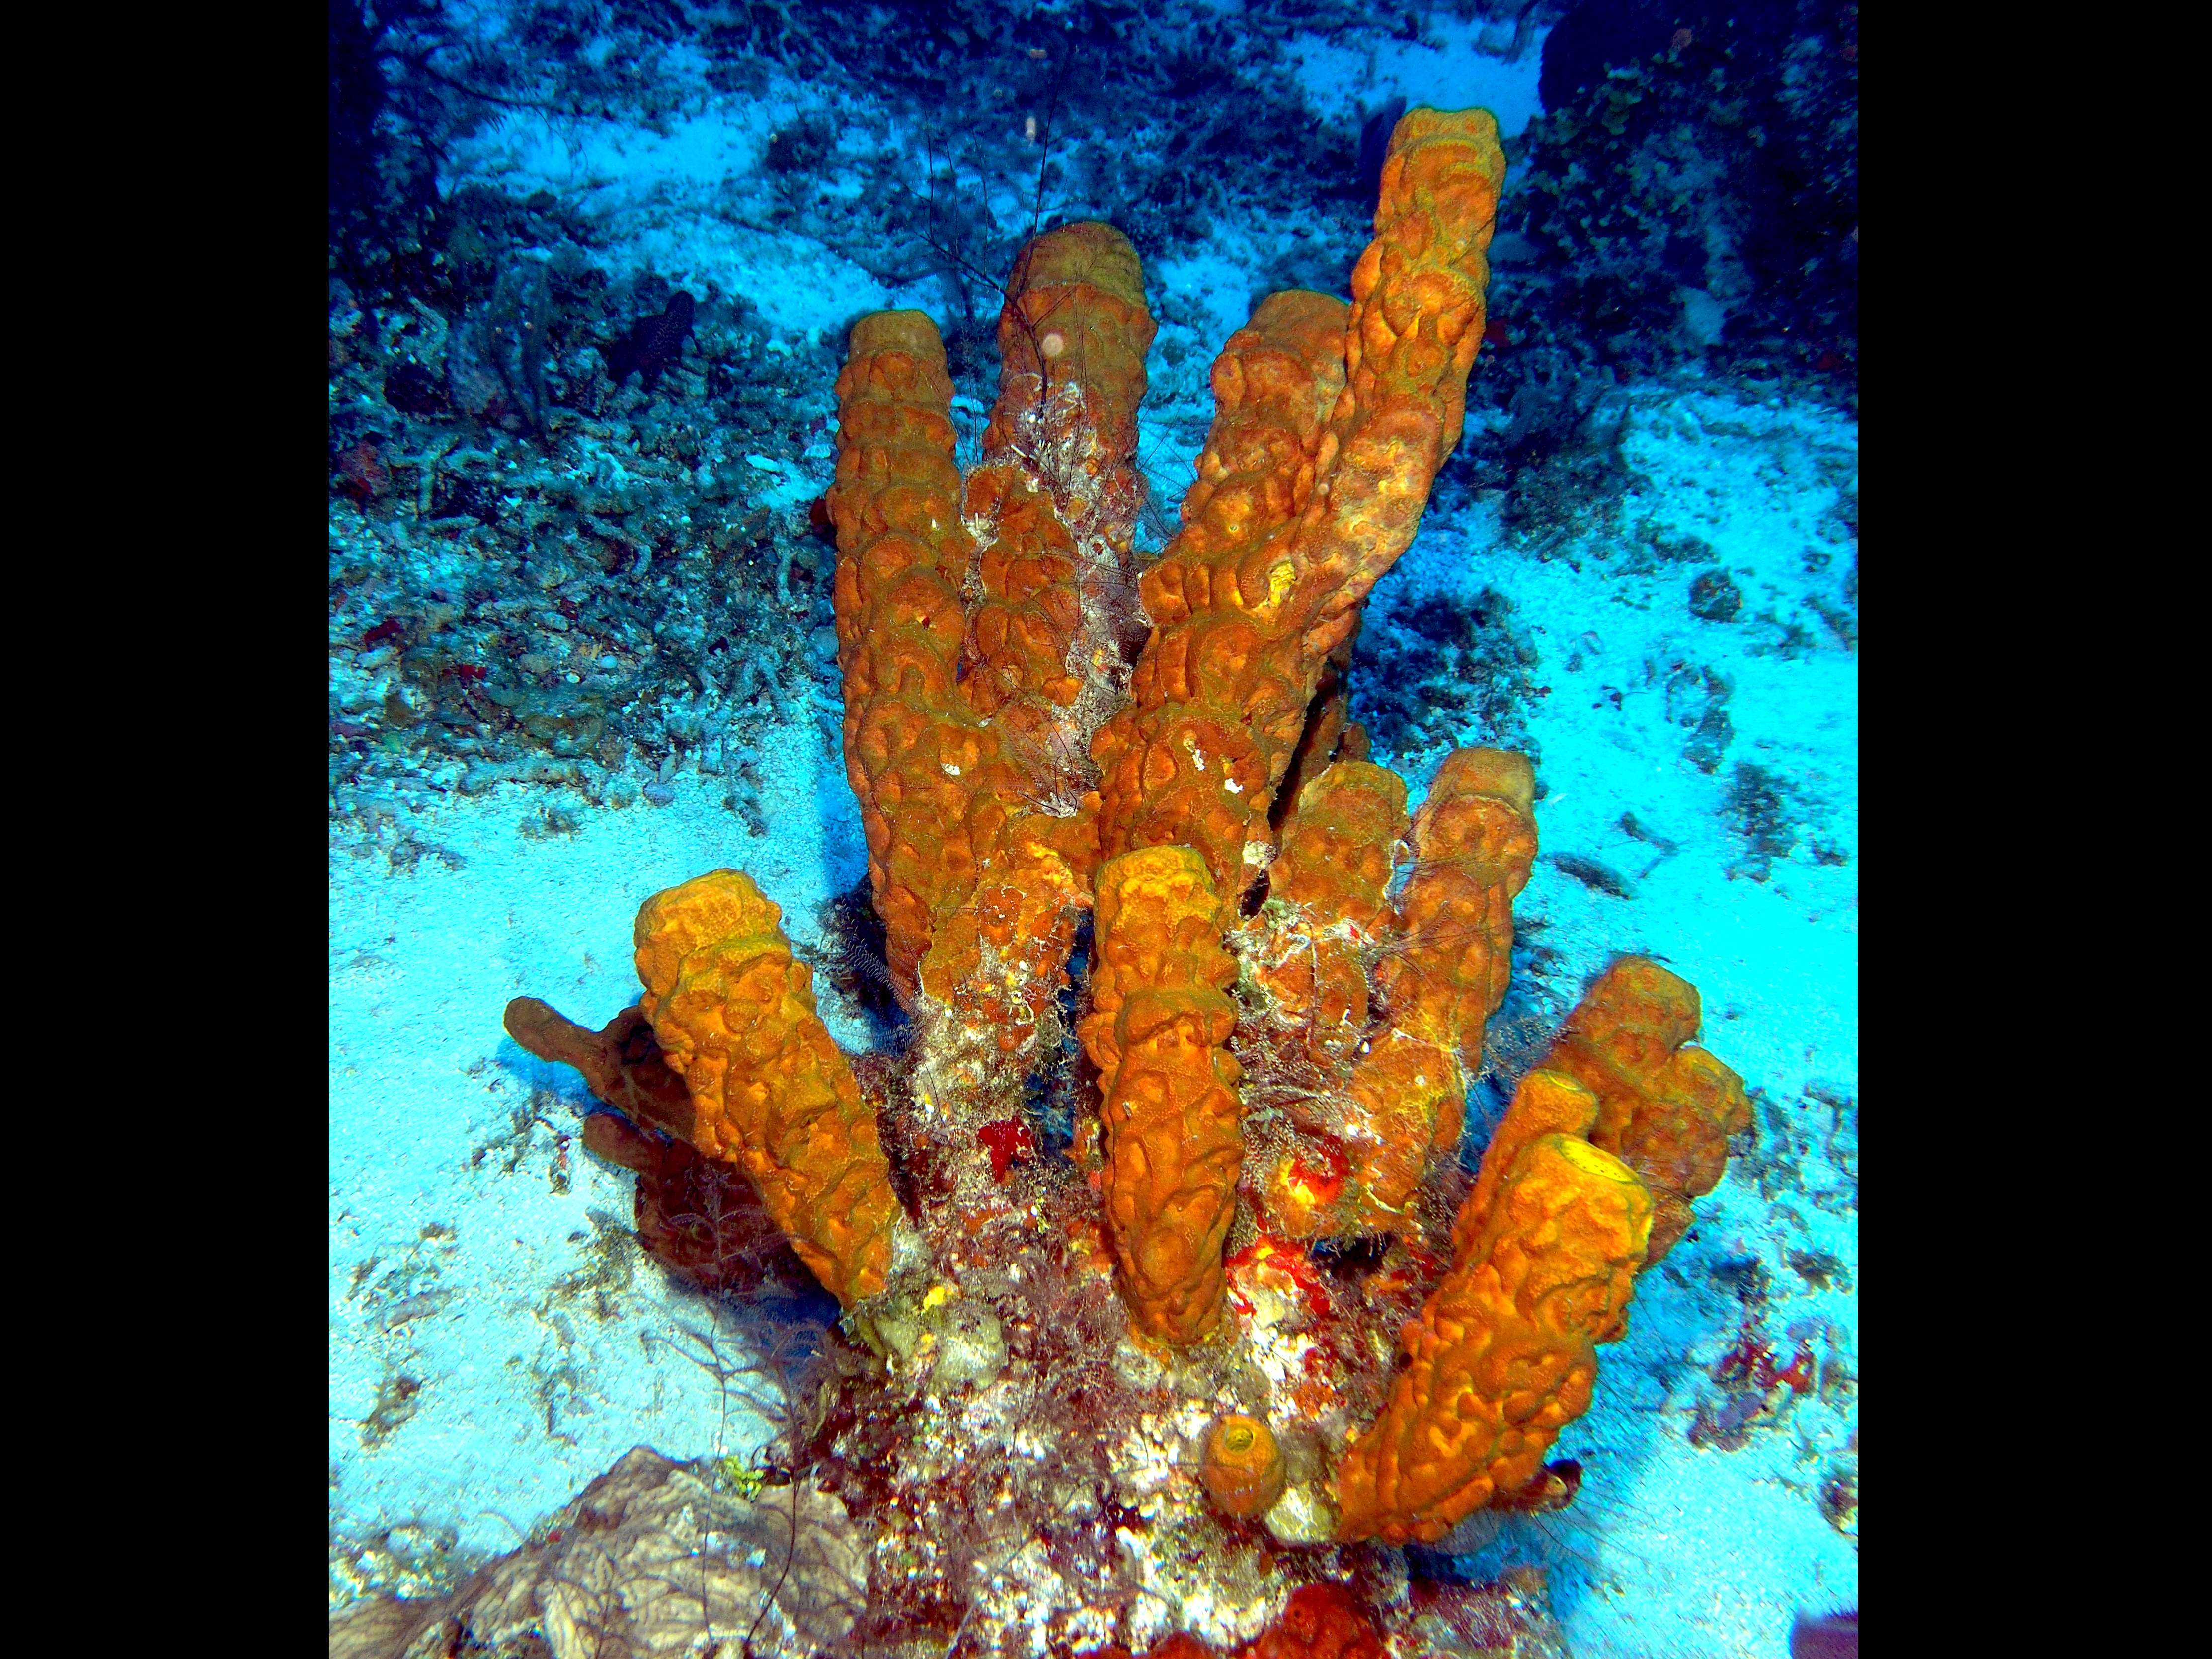 Yellow Tube Sponge - Aplysina fistularis